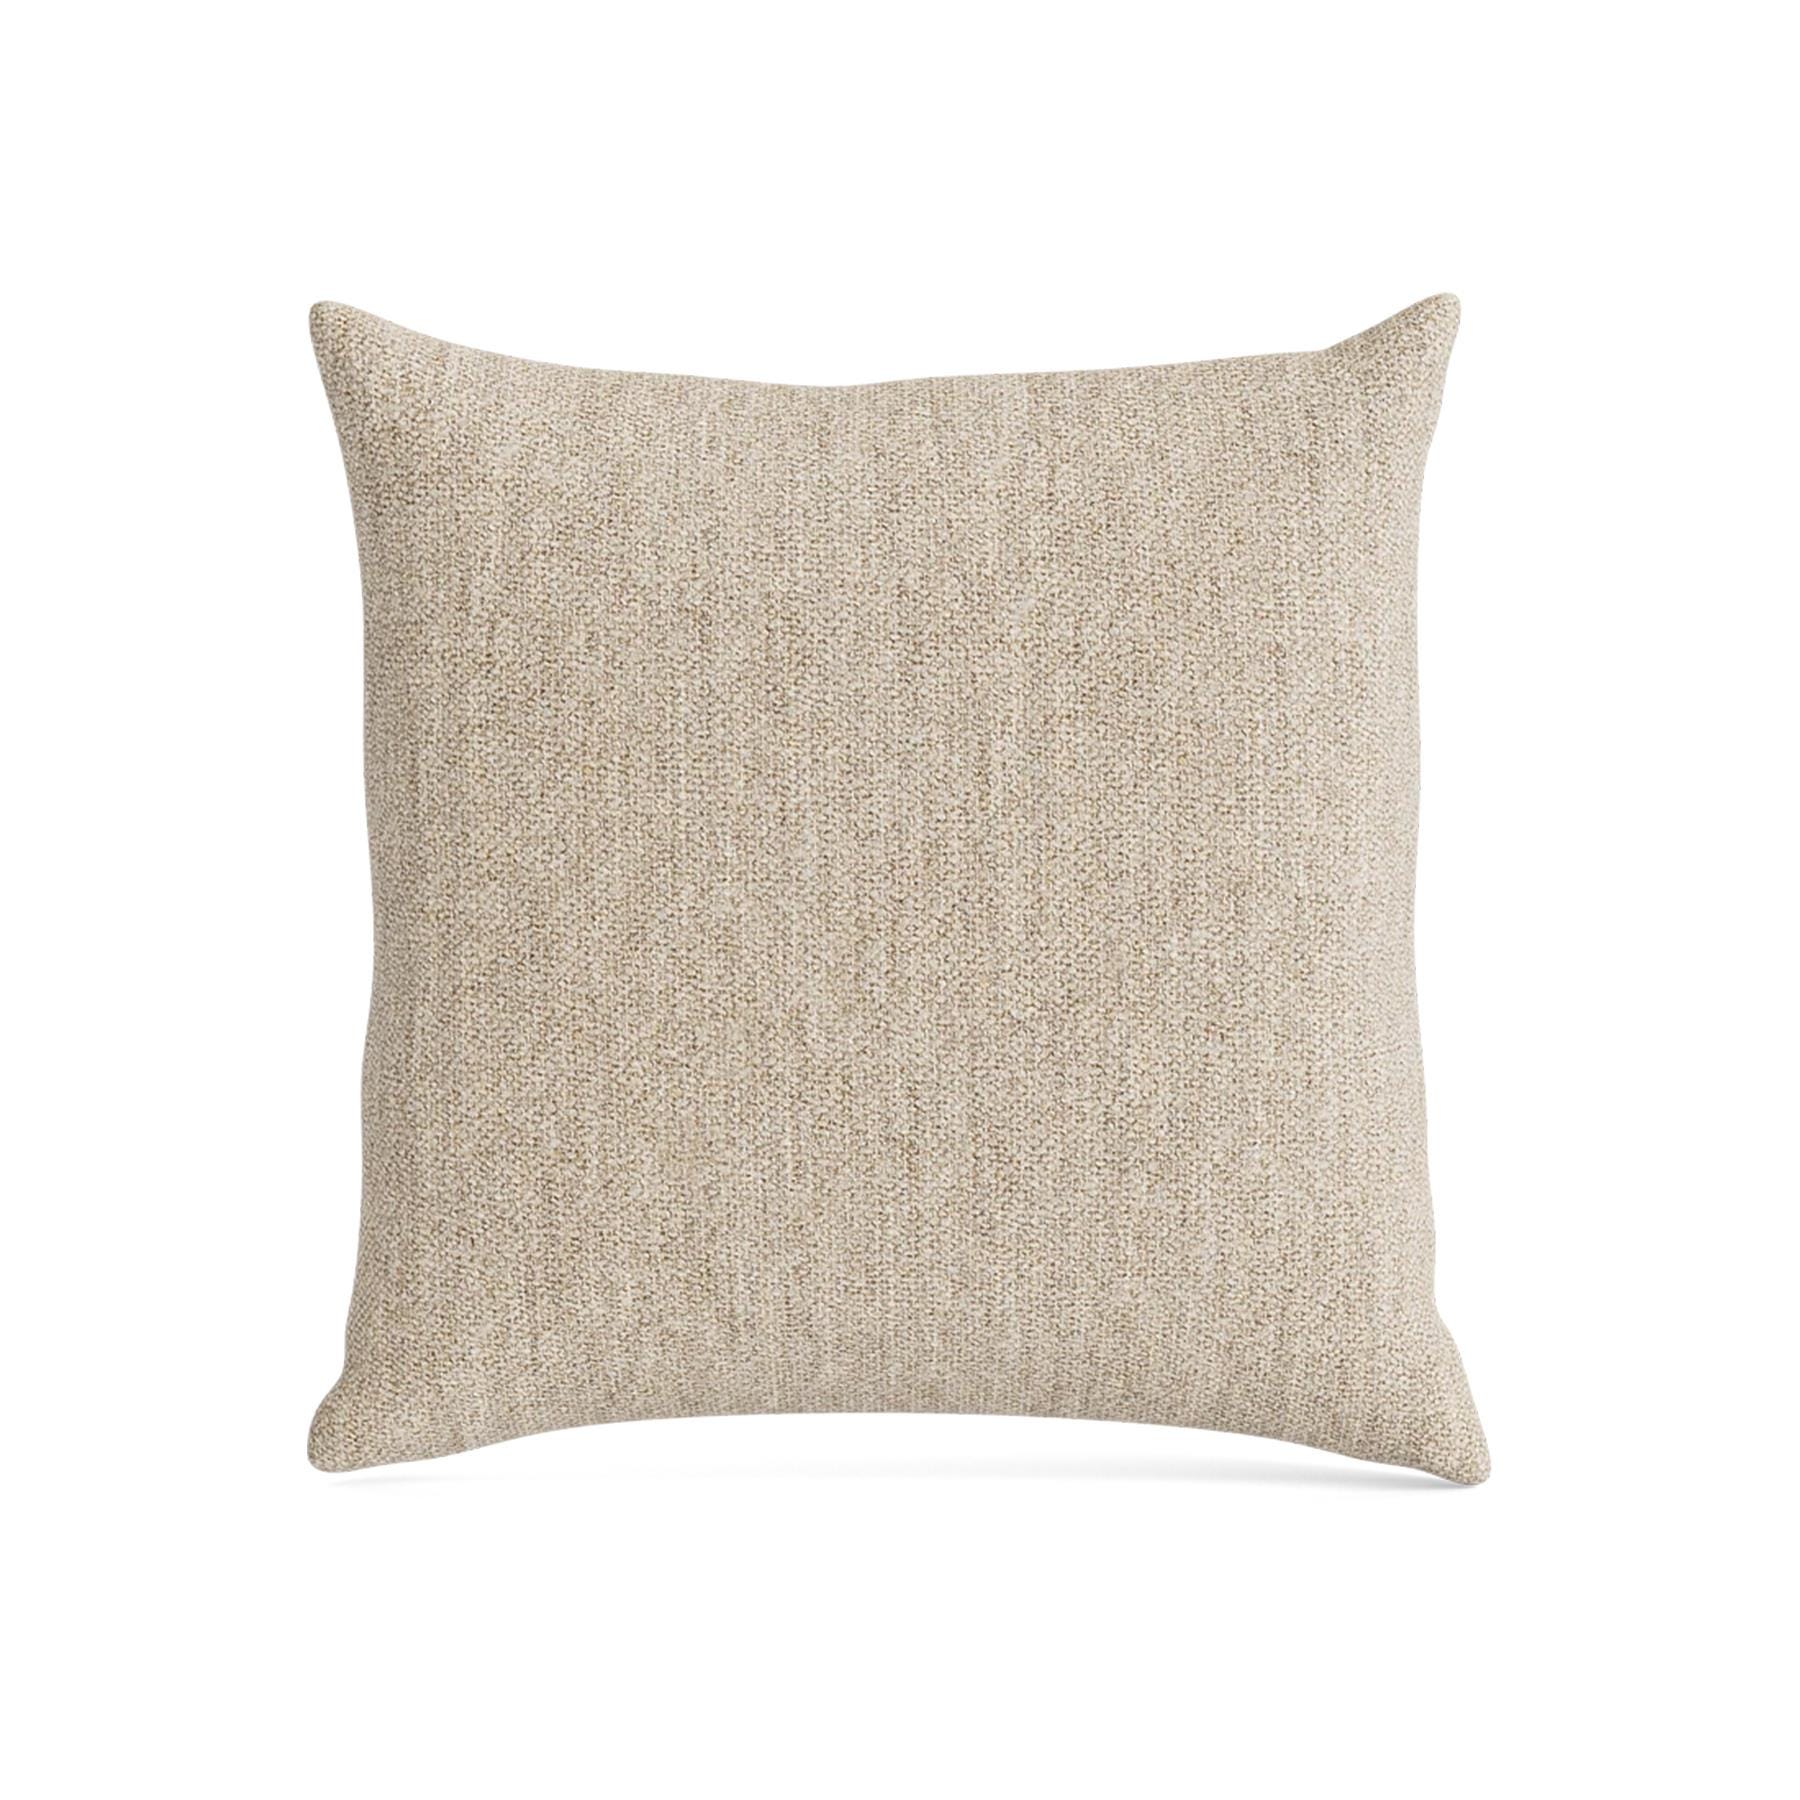 Make Nordic Pillow 50cmx50cm Crush Boucle Beige 50 Down And Fibers Cream